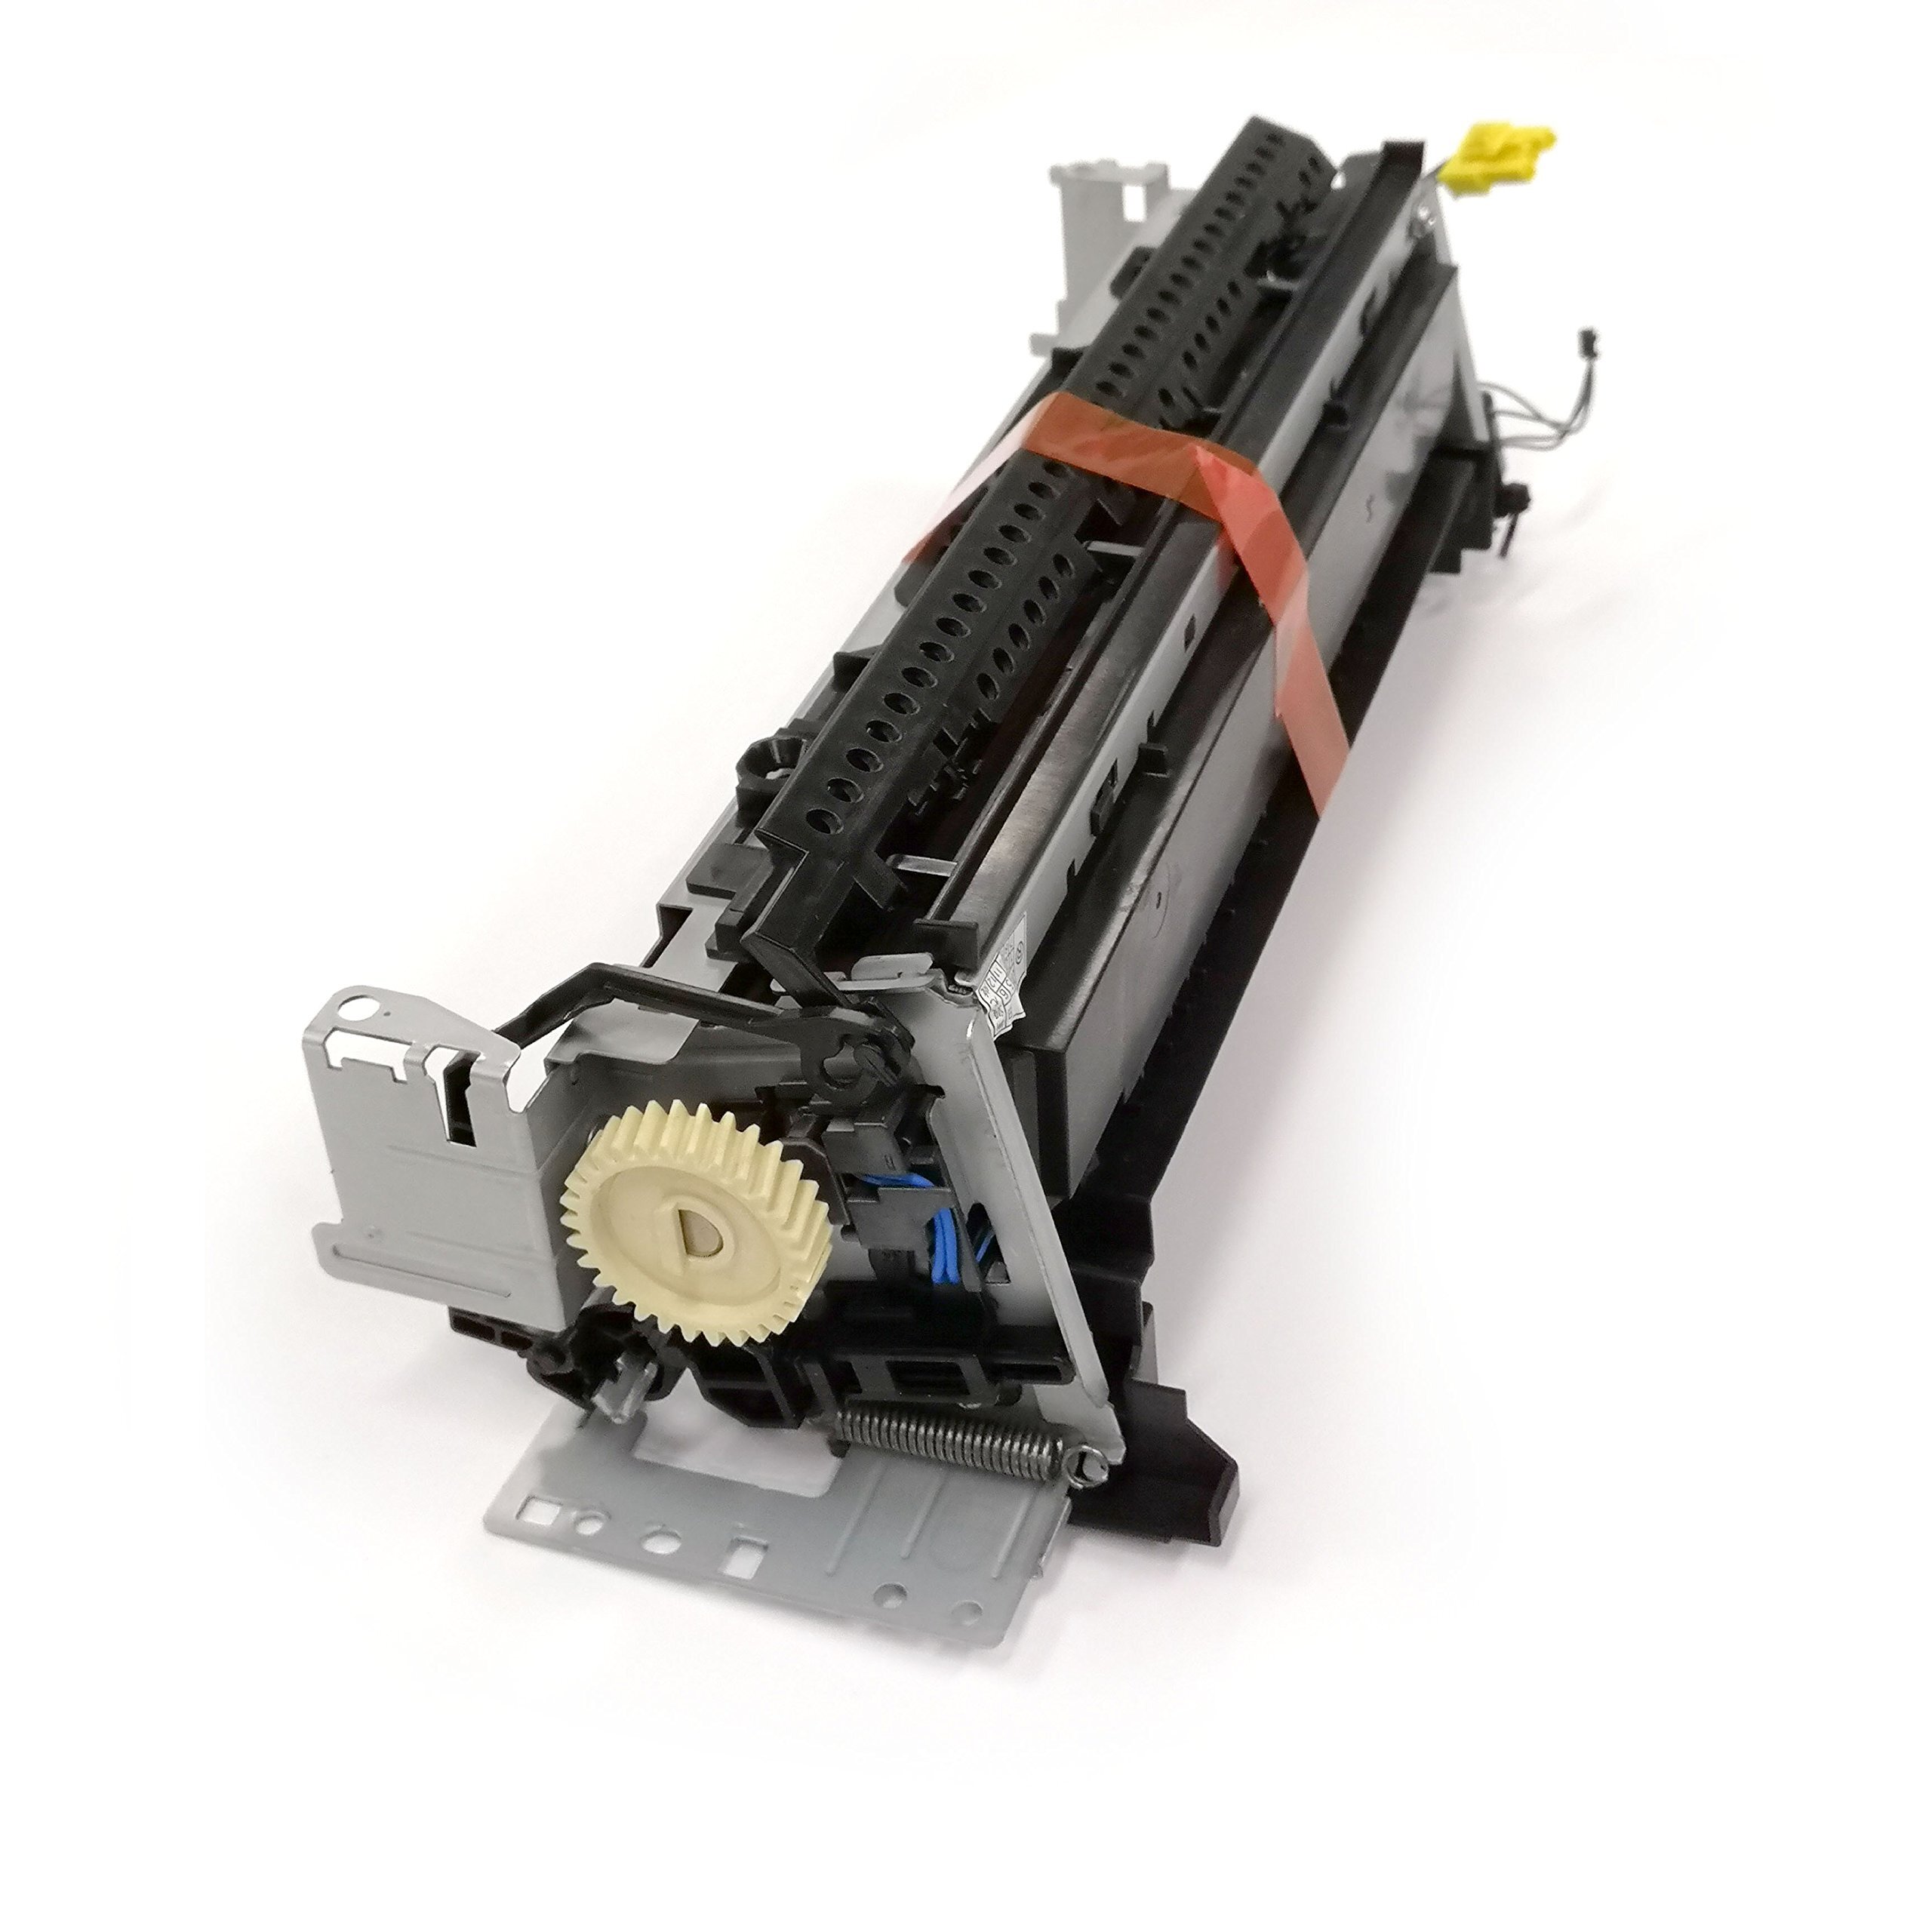 HP LaserJet Pro M402  M426  M427  M403 Printer Fuser Unit Assembly